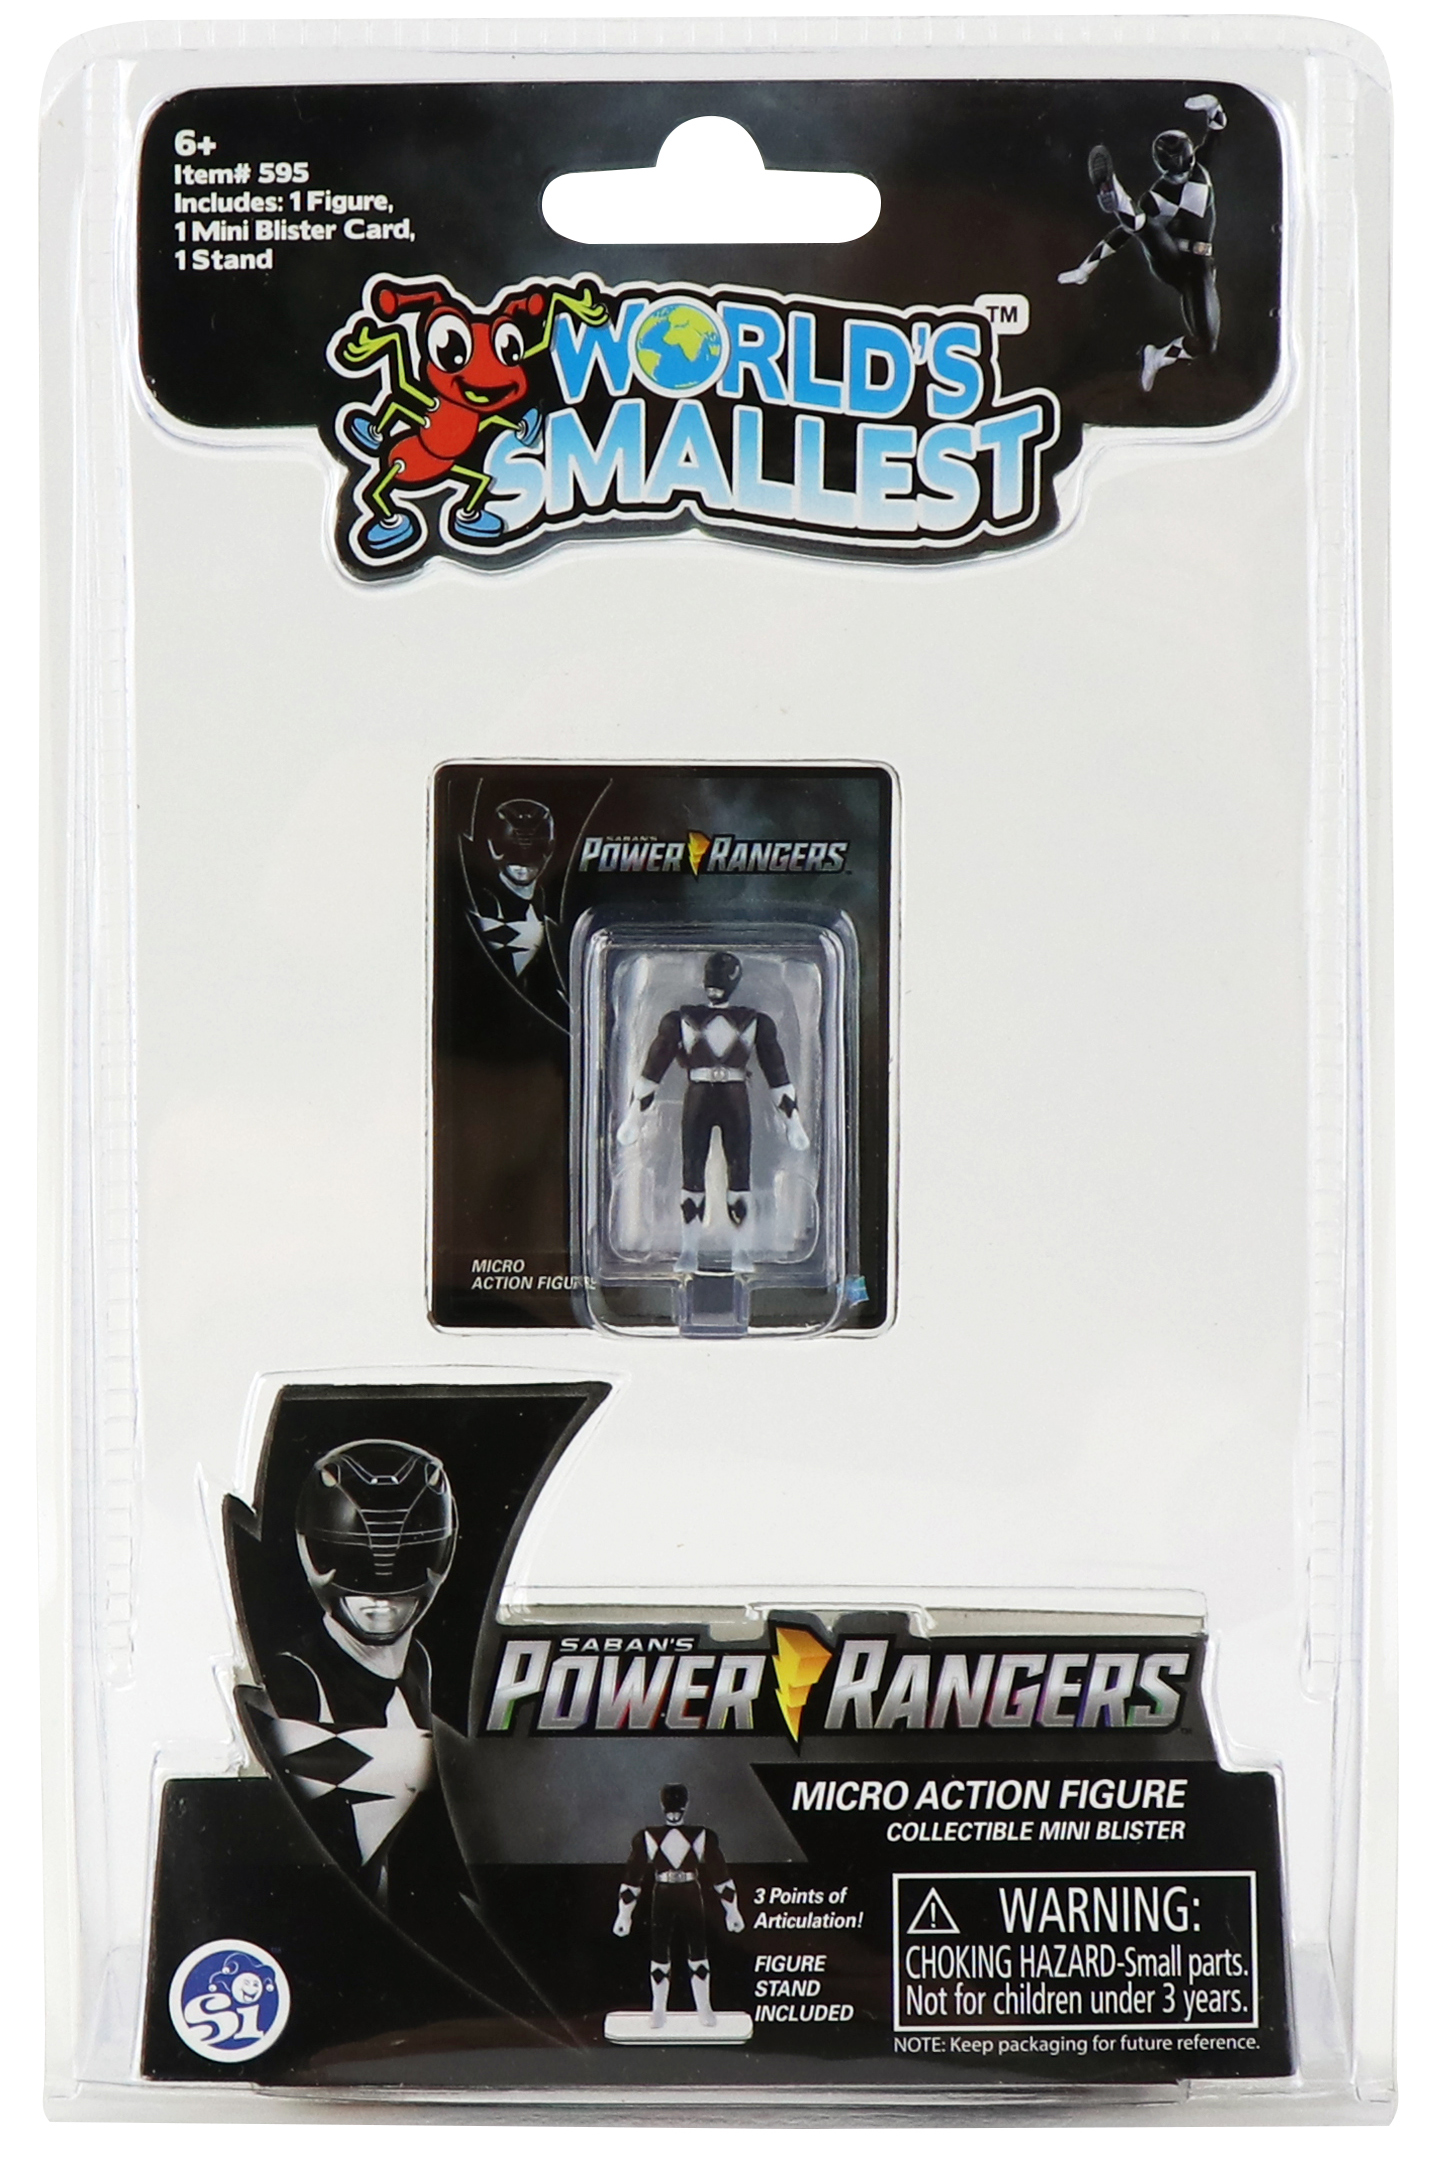 Hasbro Micro Figures. Ranger Micro. World's smallest Micro Action Figures. Micro Figures Worlds smallest.